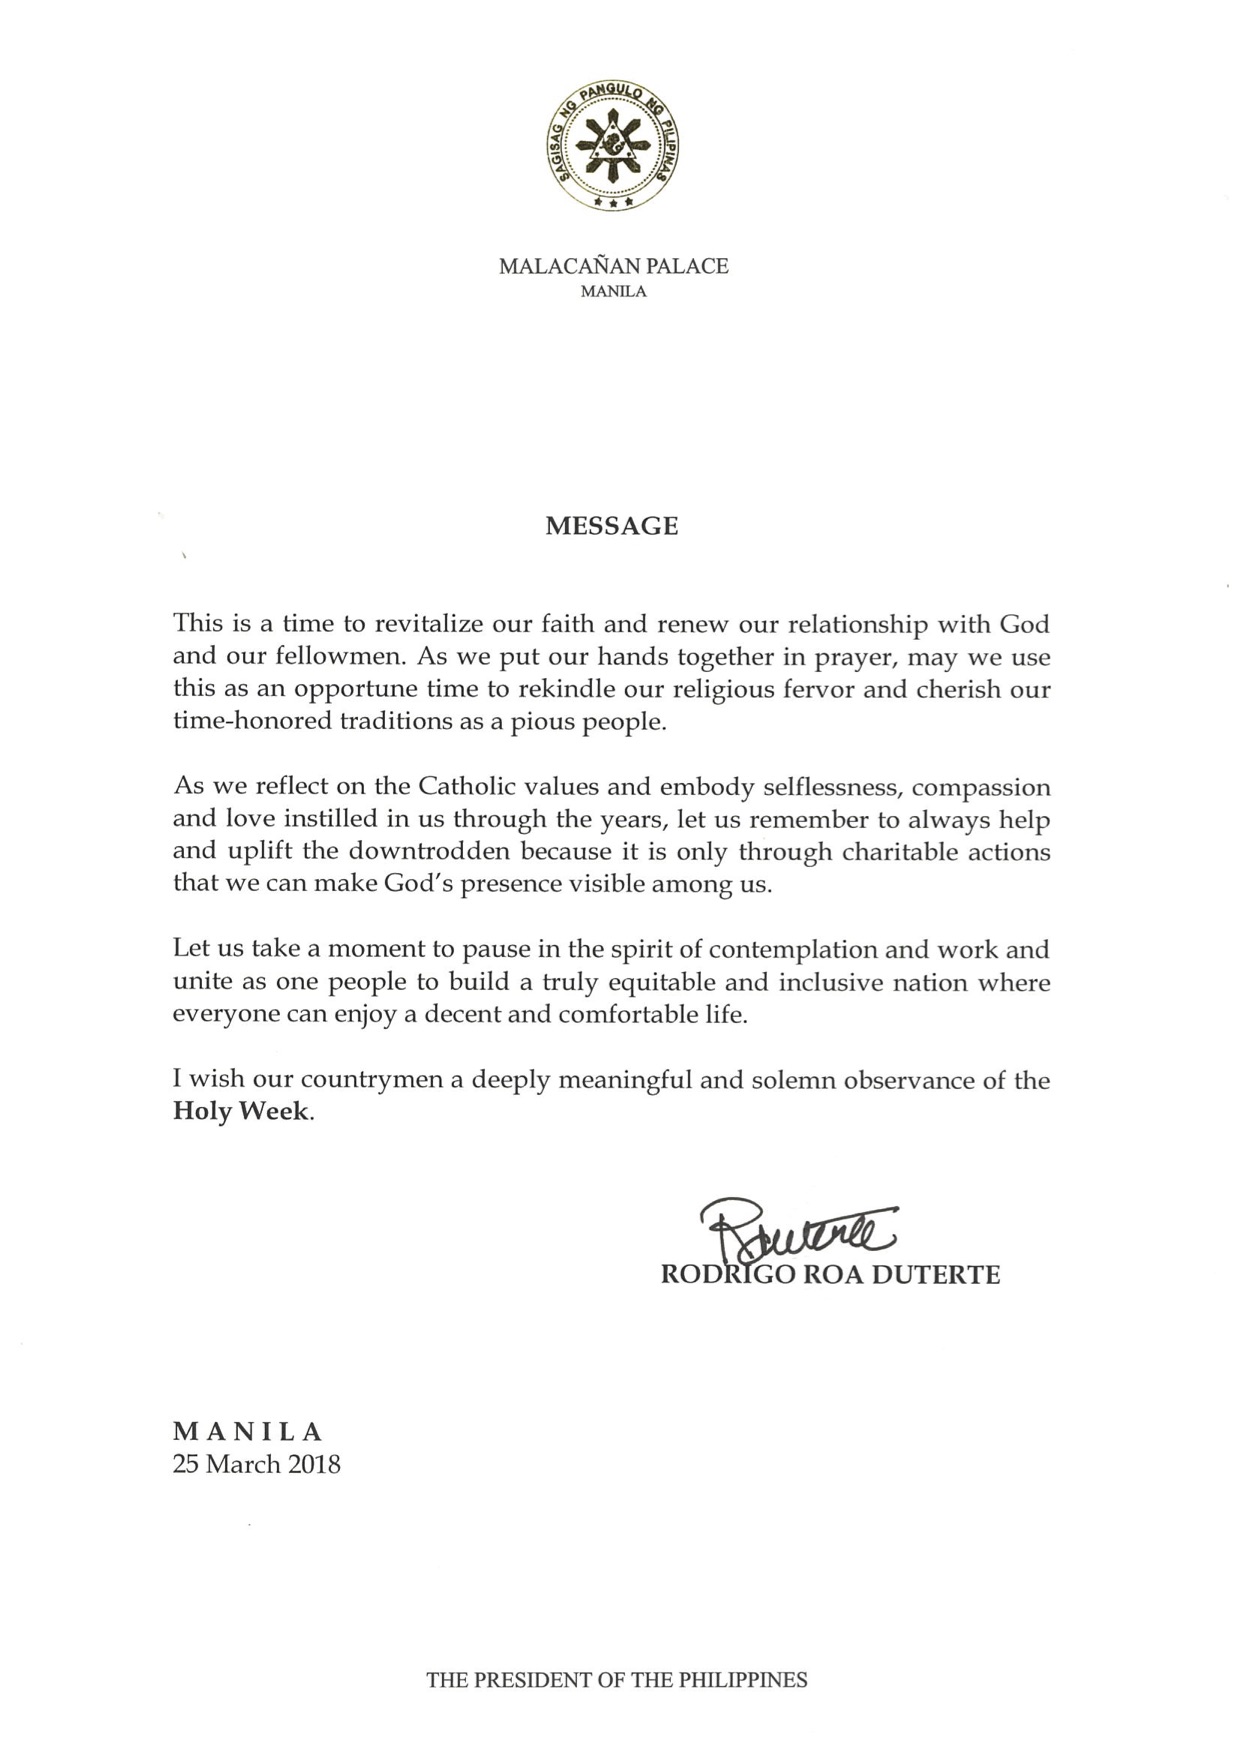 Holy Week Message of President Rodrigo Roa Duterte (English version